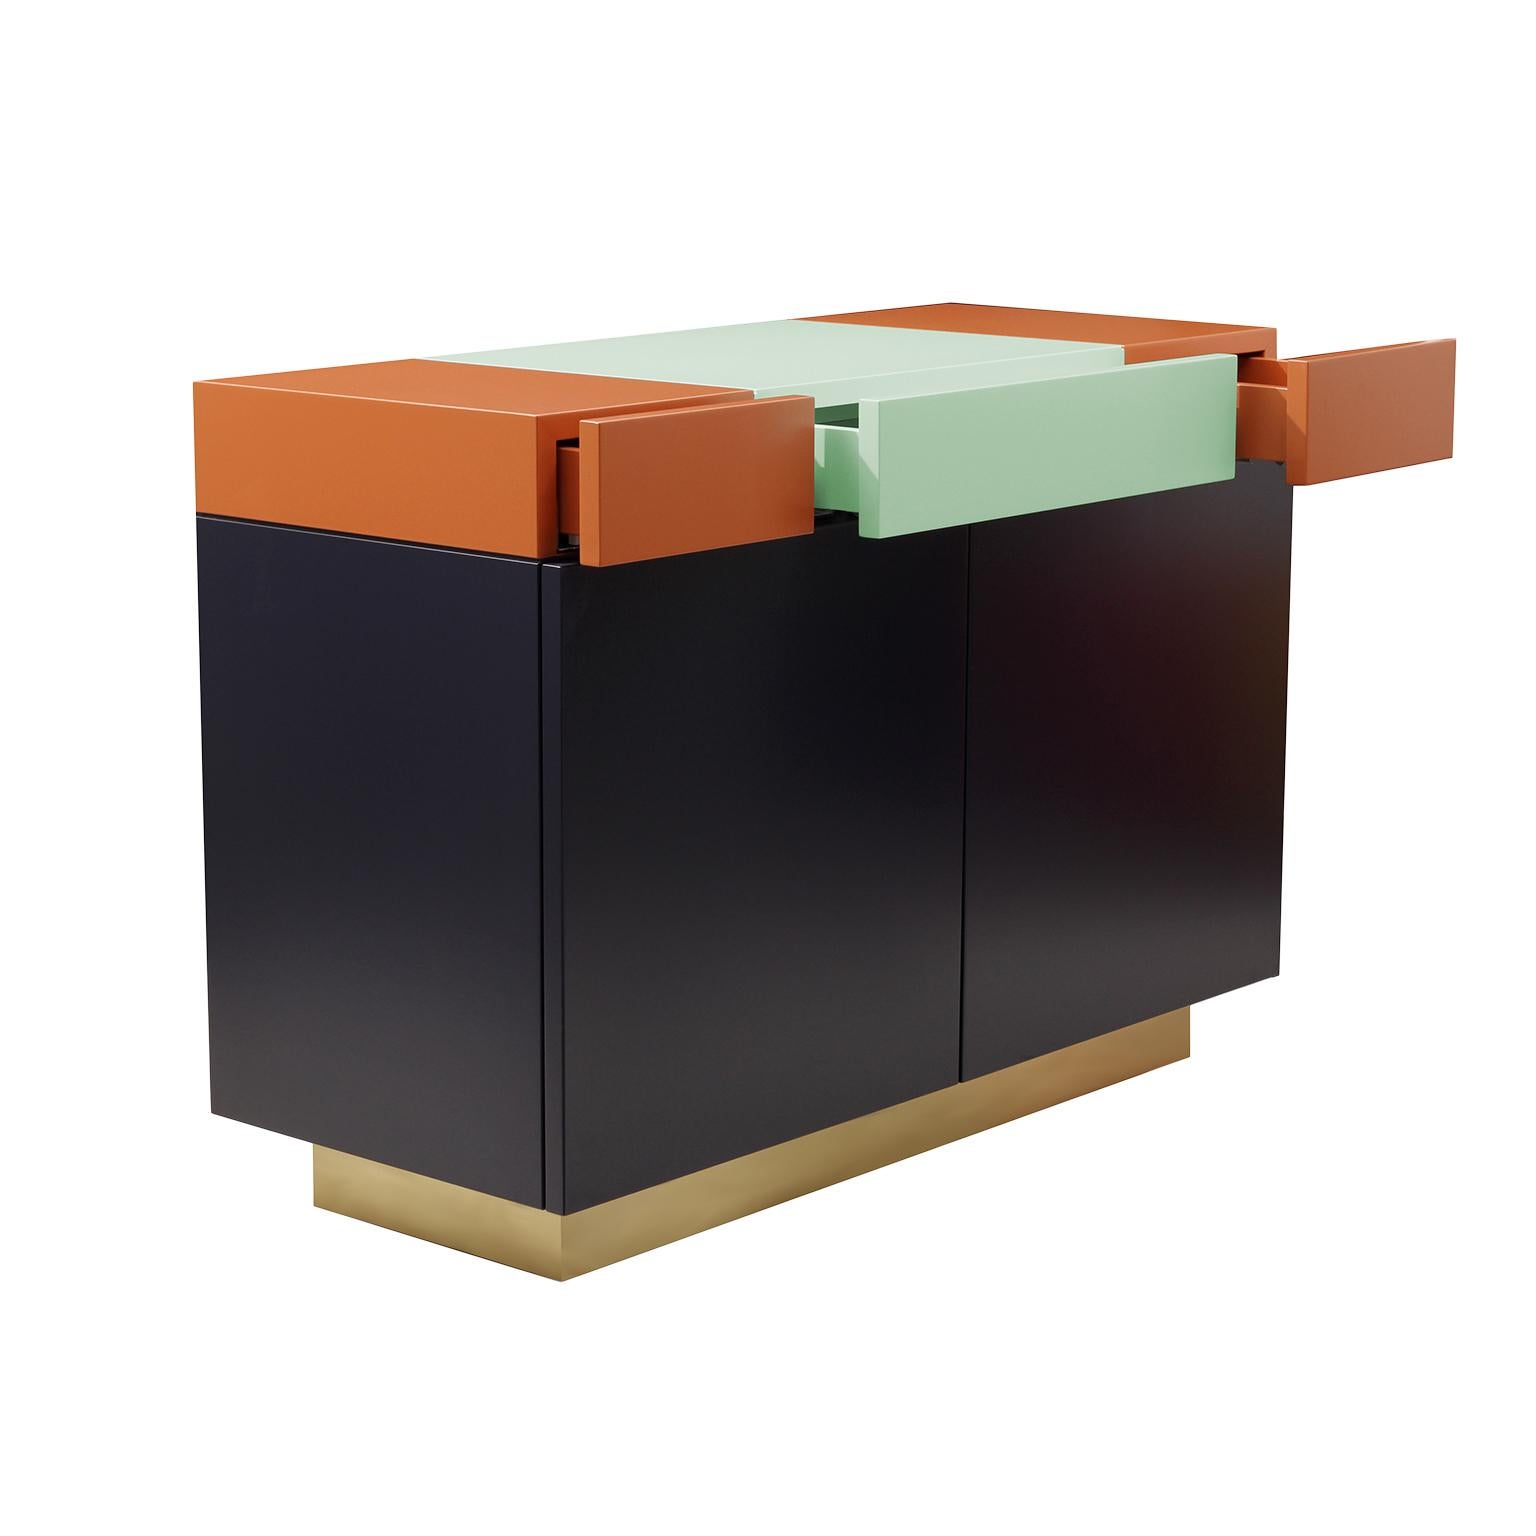 Brazilian Greta credenza Sophisticated Lacquered Furniture Handmade Details 120 For Sale